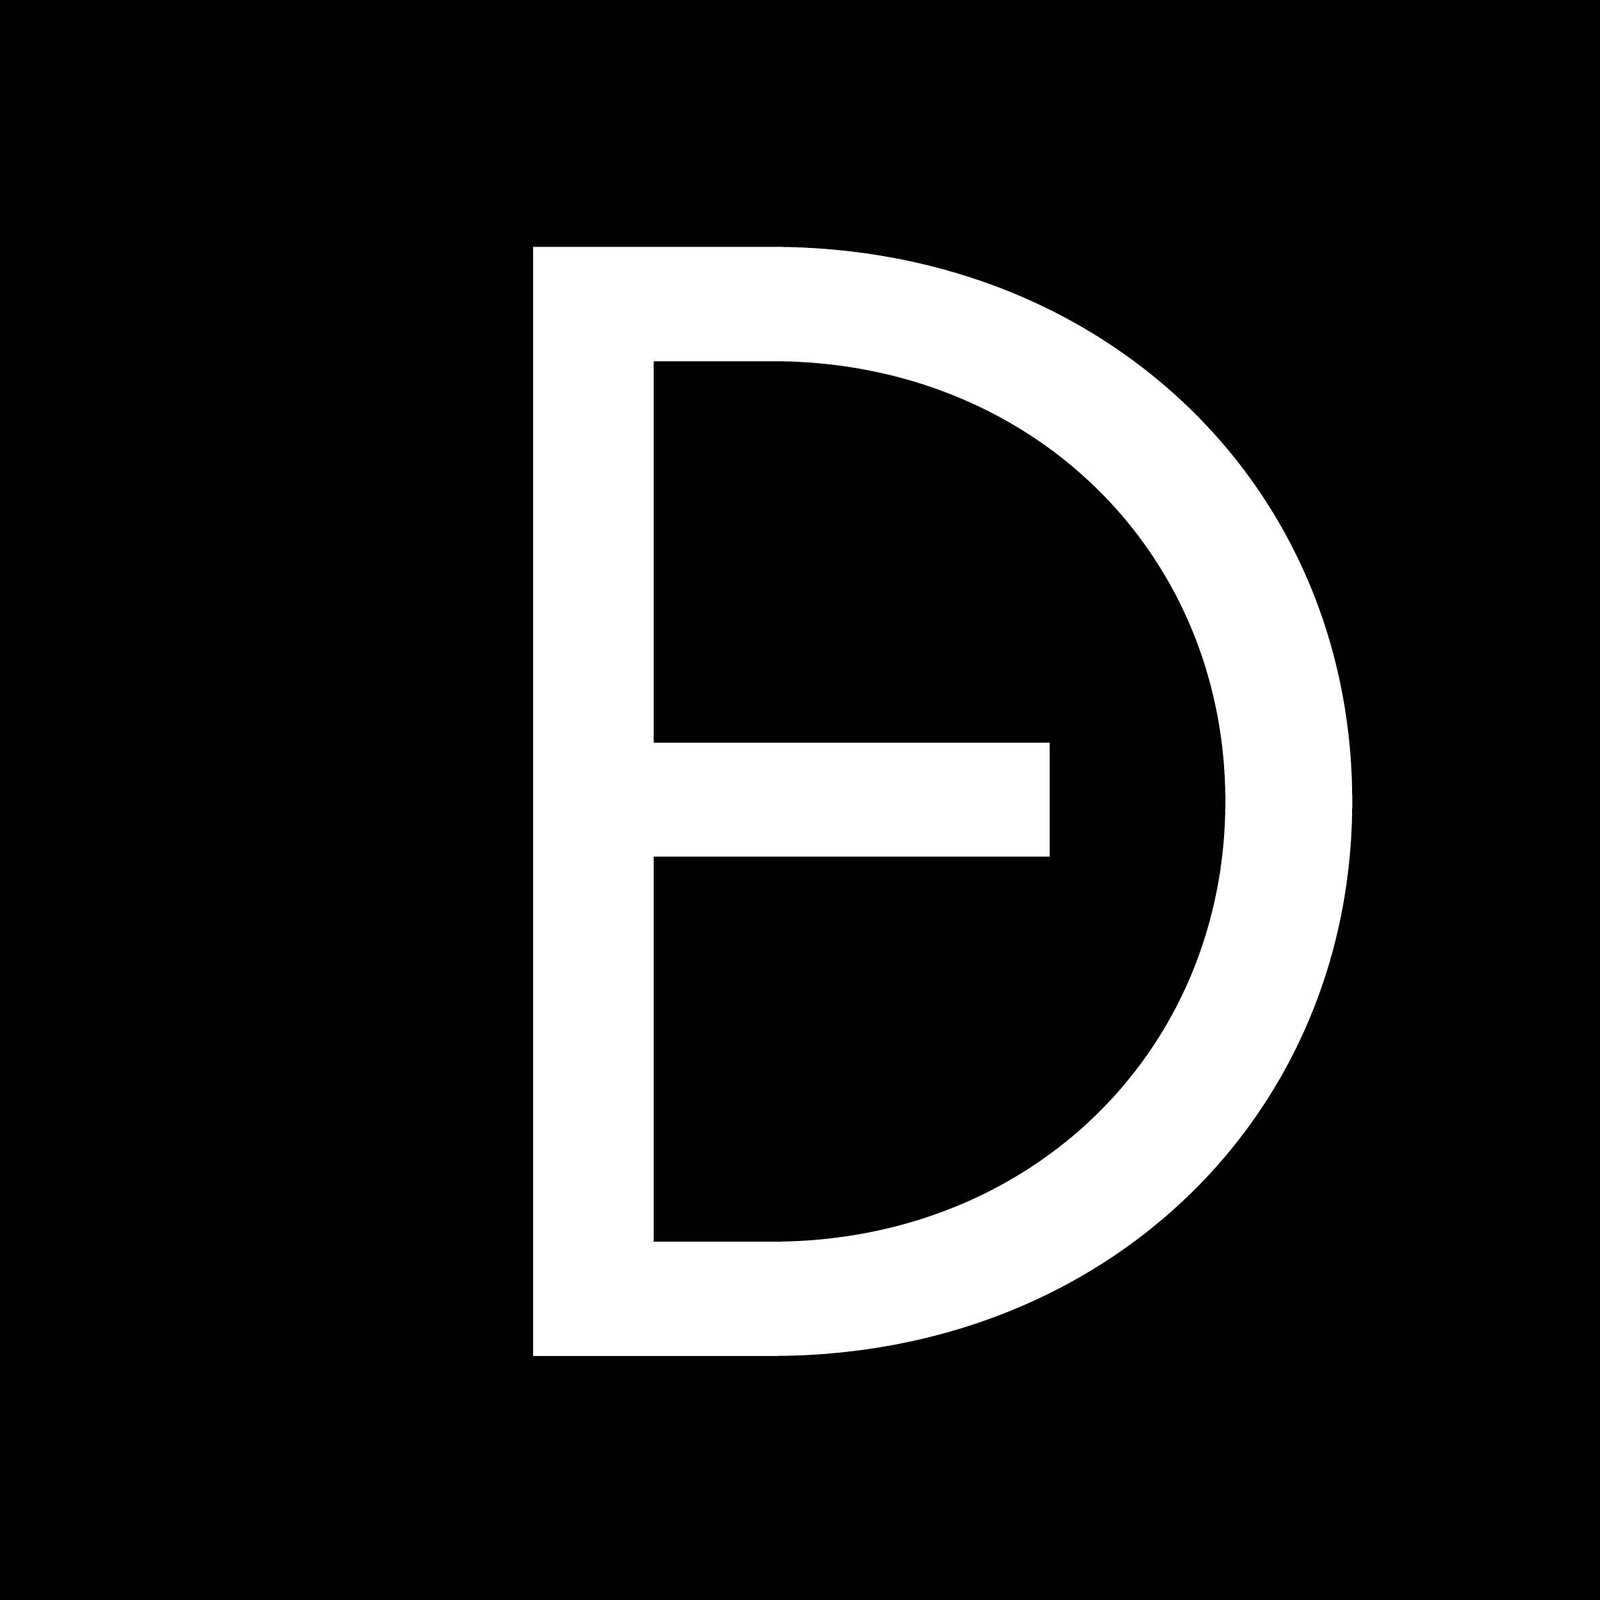 editdesignstudio logo